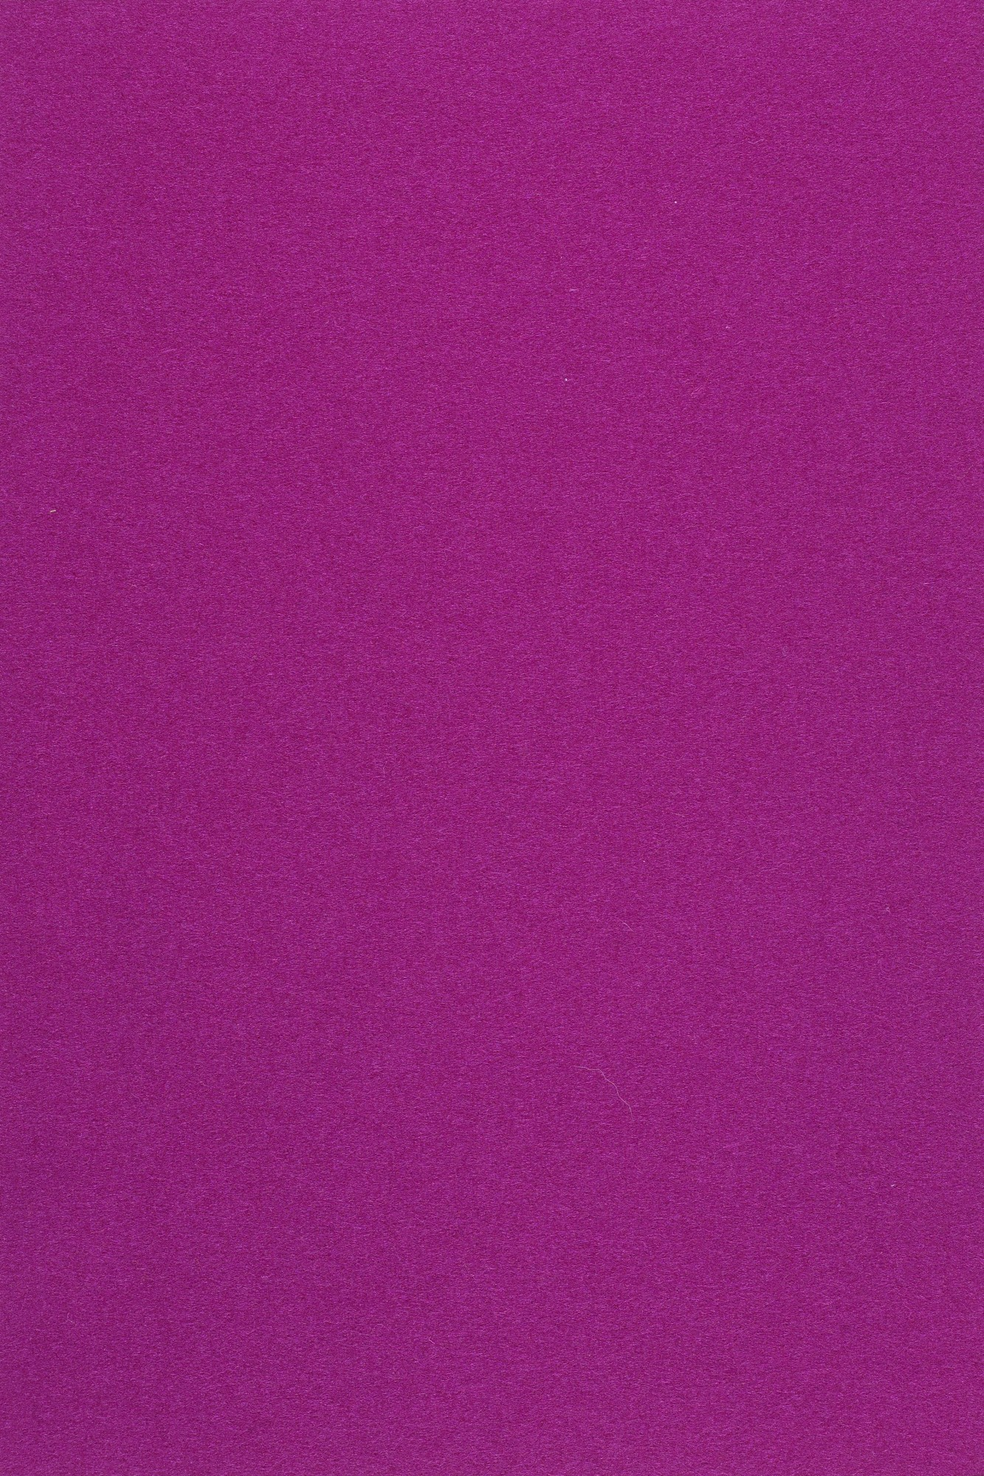 Fabric sample Divina 3 662 purple